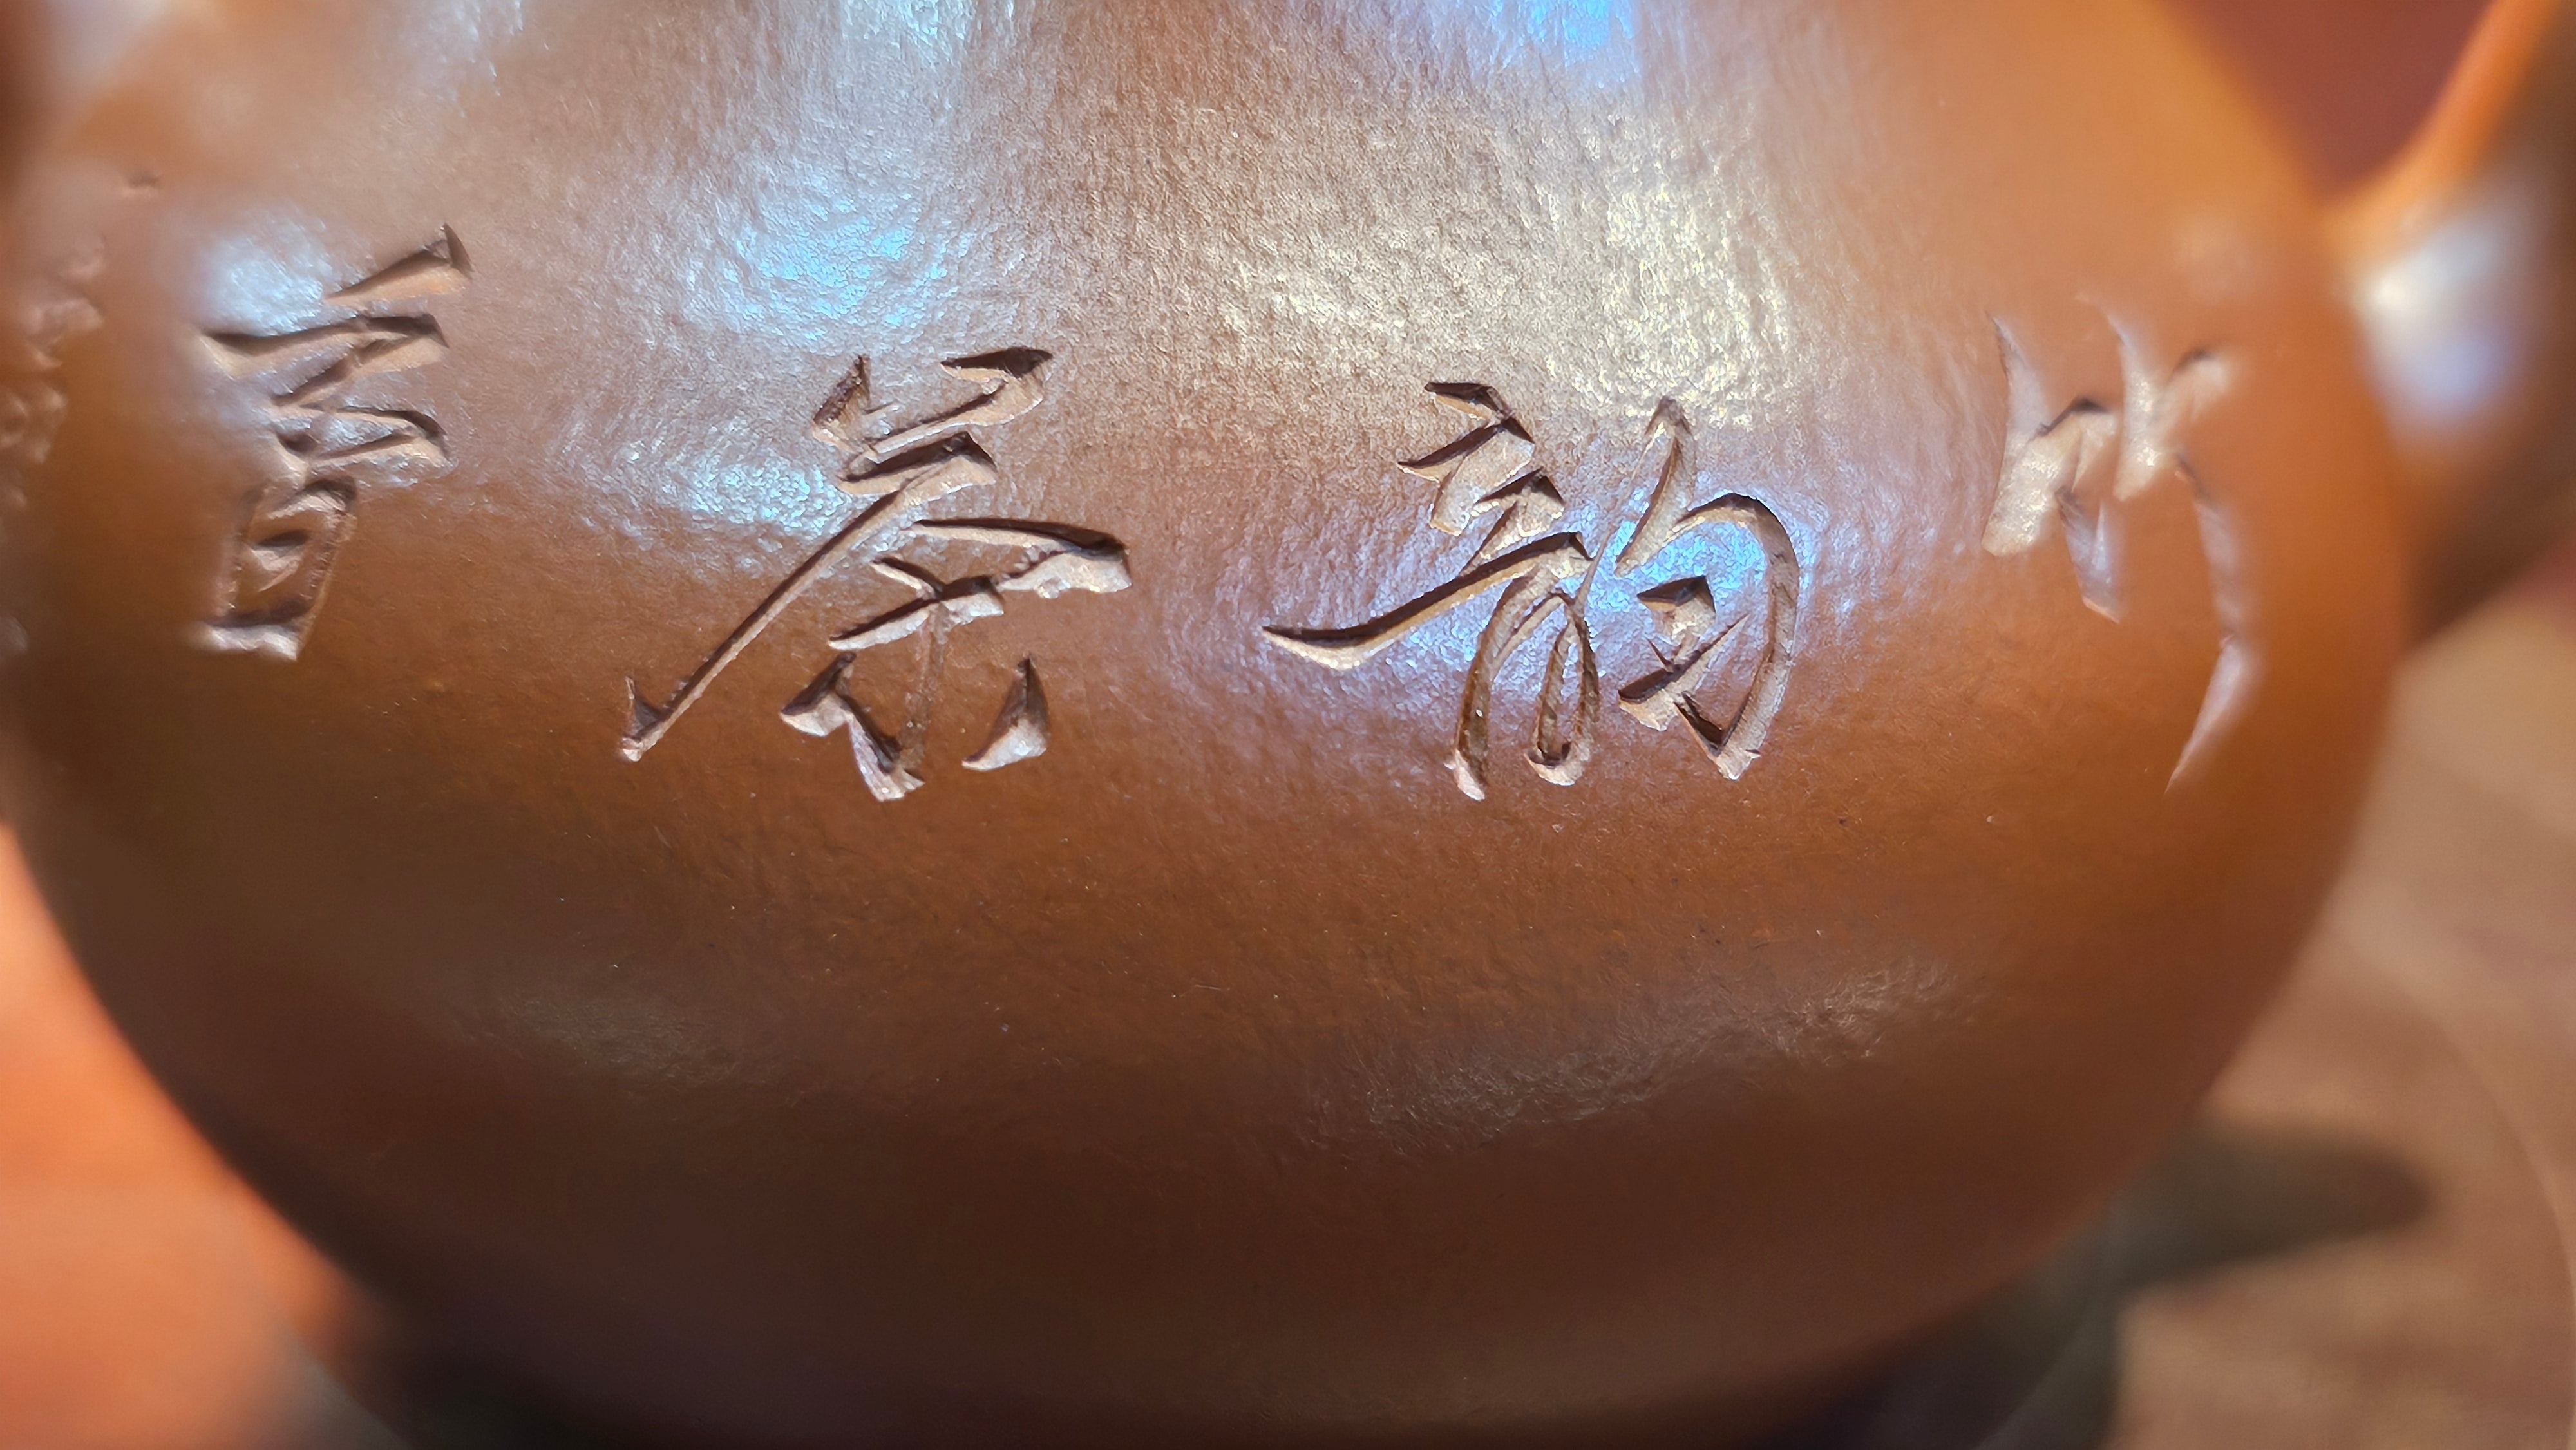 Li Xing 梨形, 180.1ml, Xiao Mei Yao Zhu Ni 小煤窑朱泥, by Craftsman Wang Xing 王兴, Engraving by Craftsman Ding Tie Ping 丁铁平 (Artistic Byname 一德).